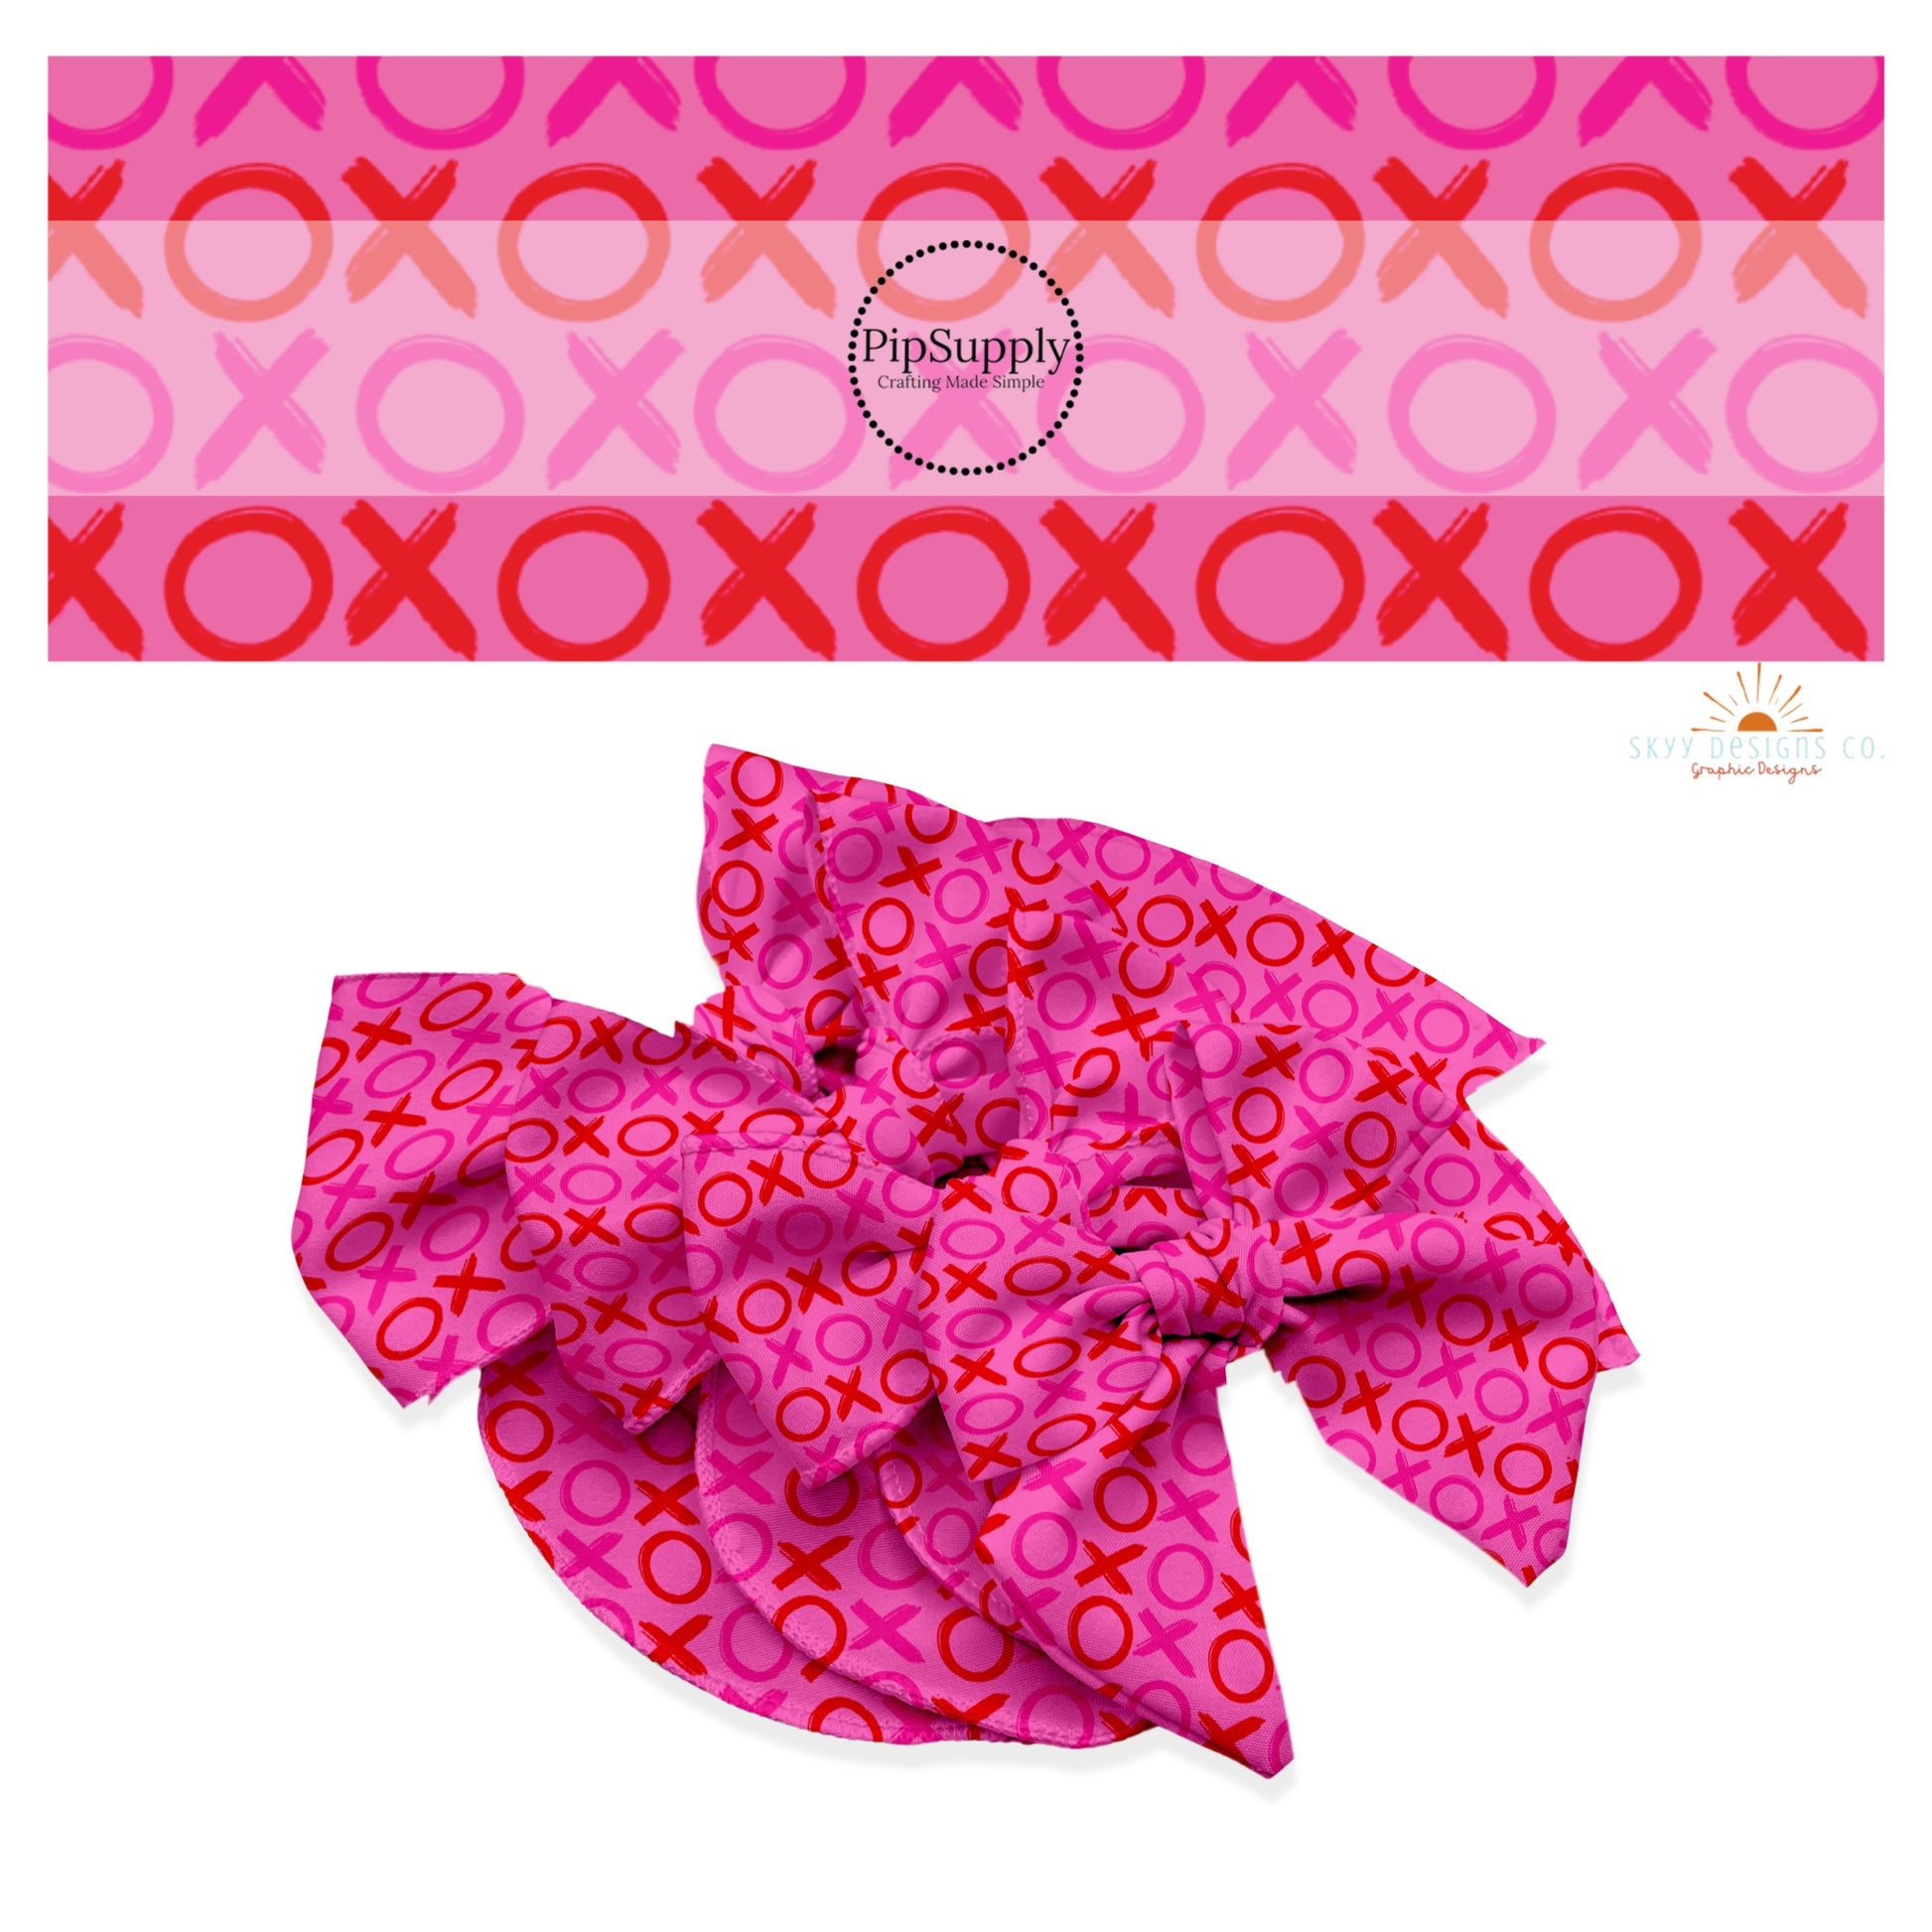 Mutli xoxo on bright pink hair bow strips